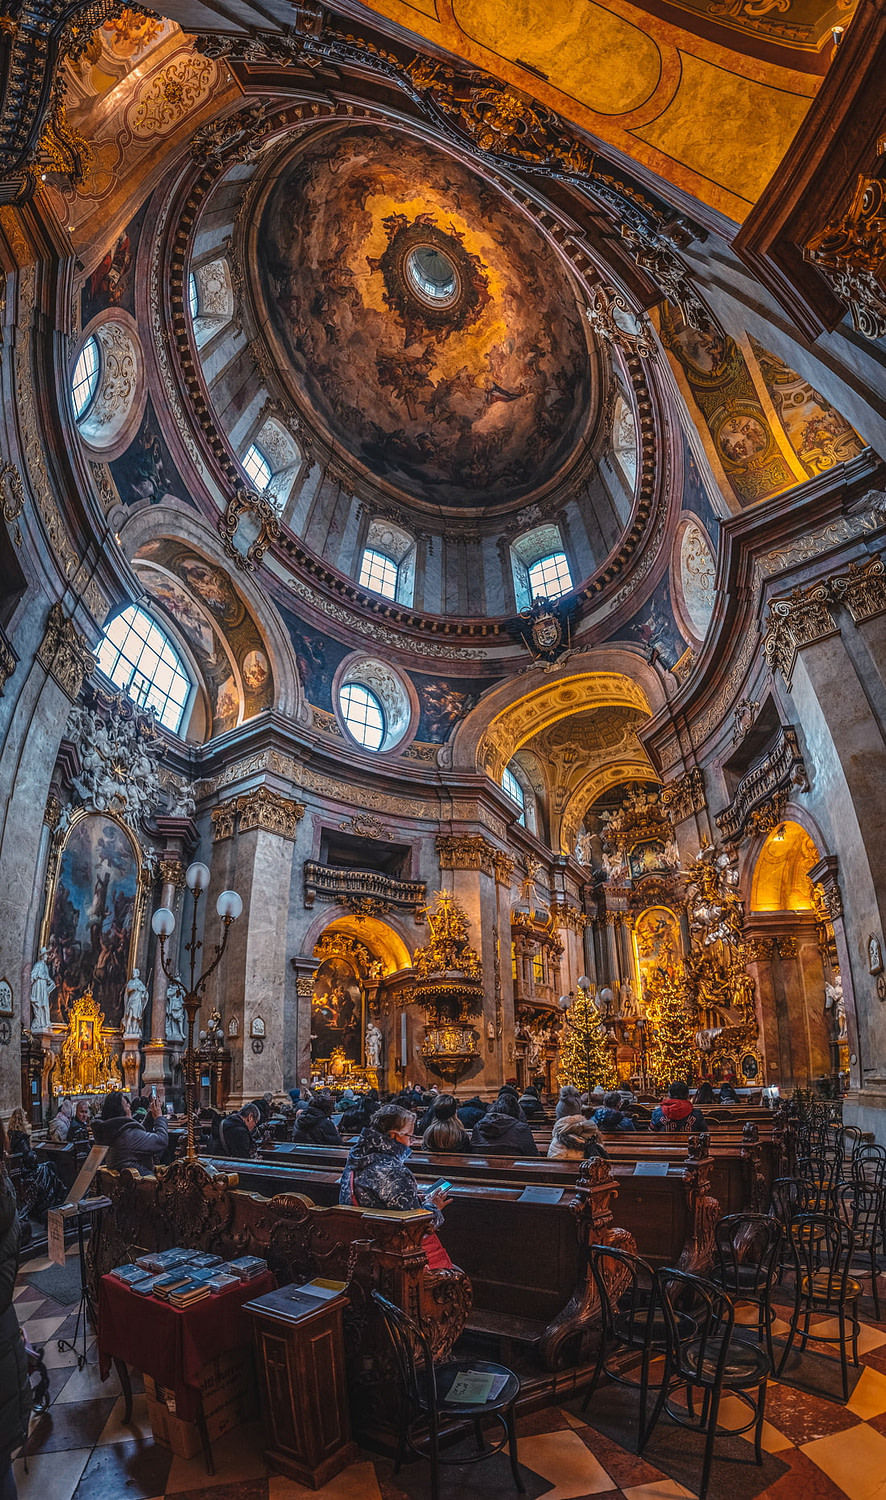 Baroque art inside this church in Vienna